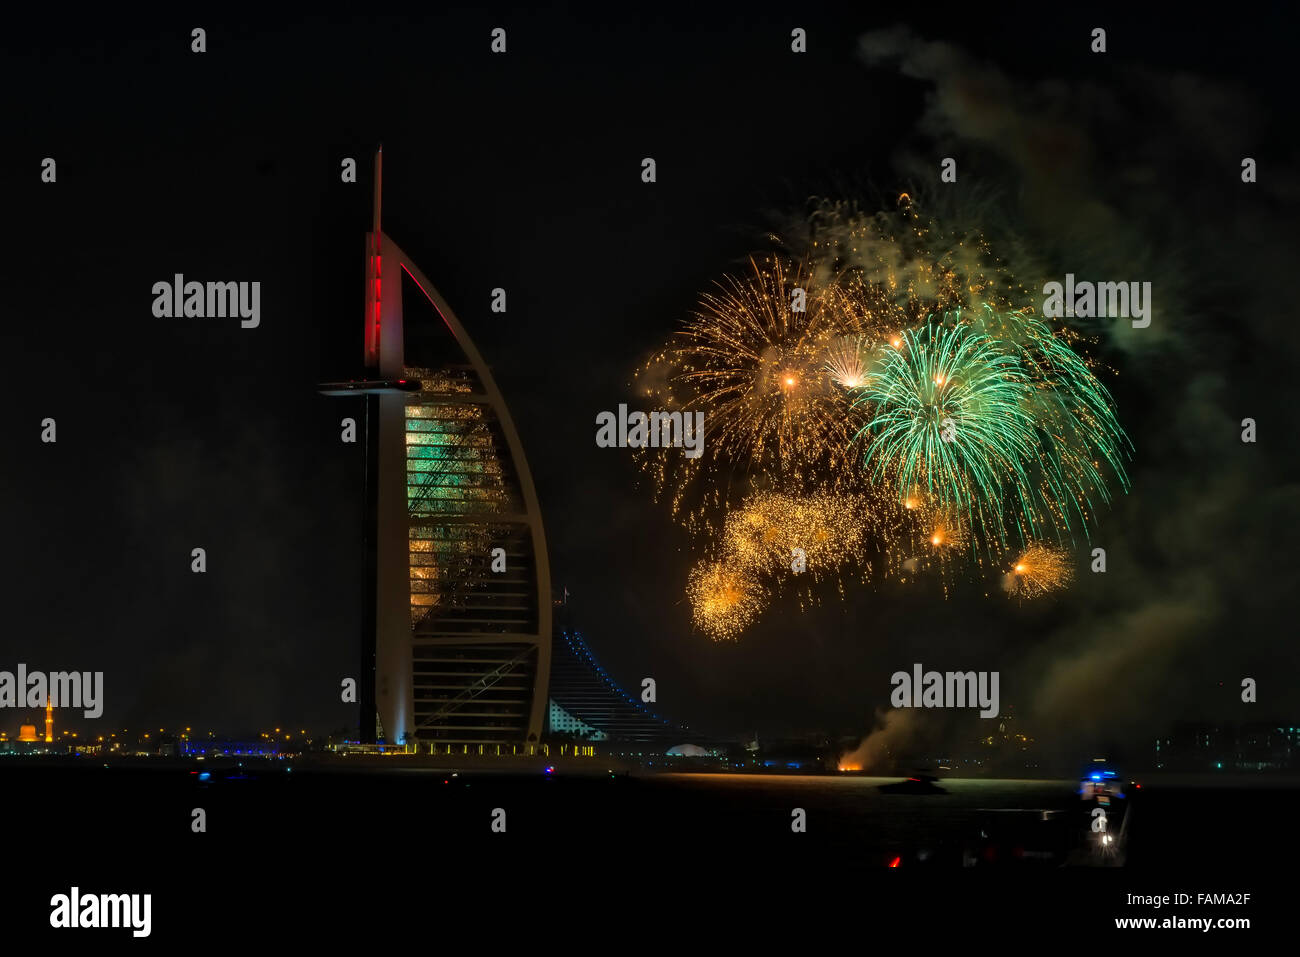 New Year 2015 Fireworks in Dubai, UAE Stock Photo